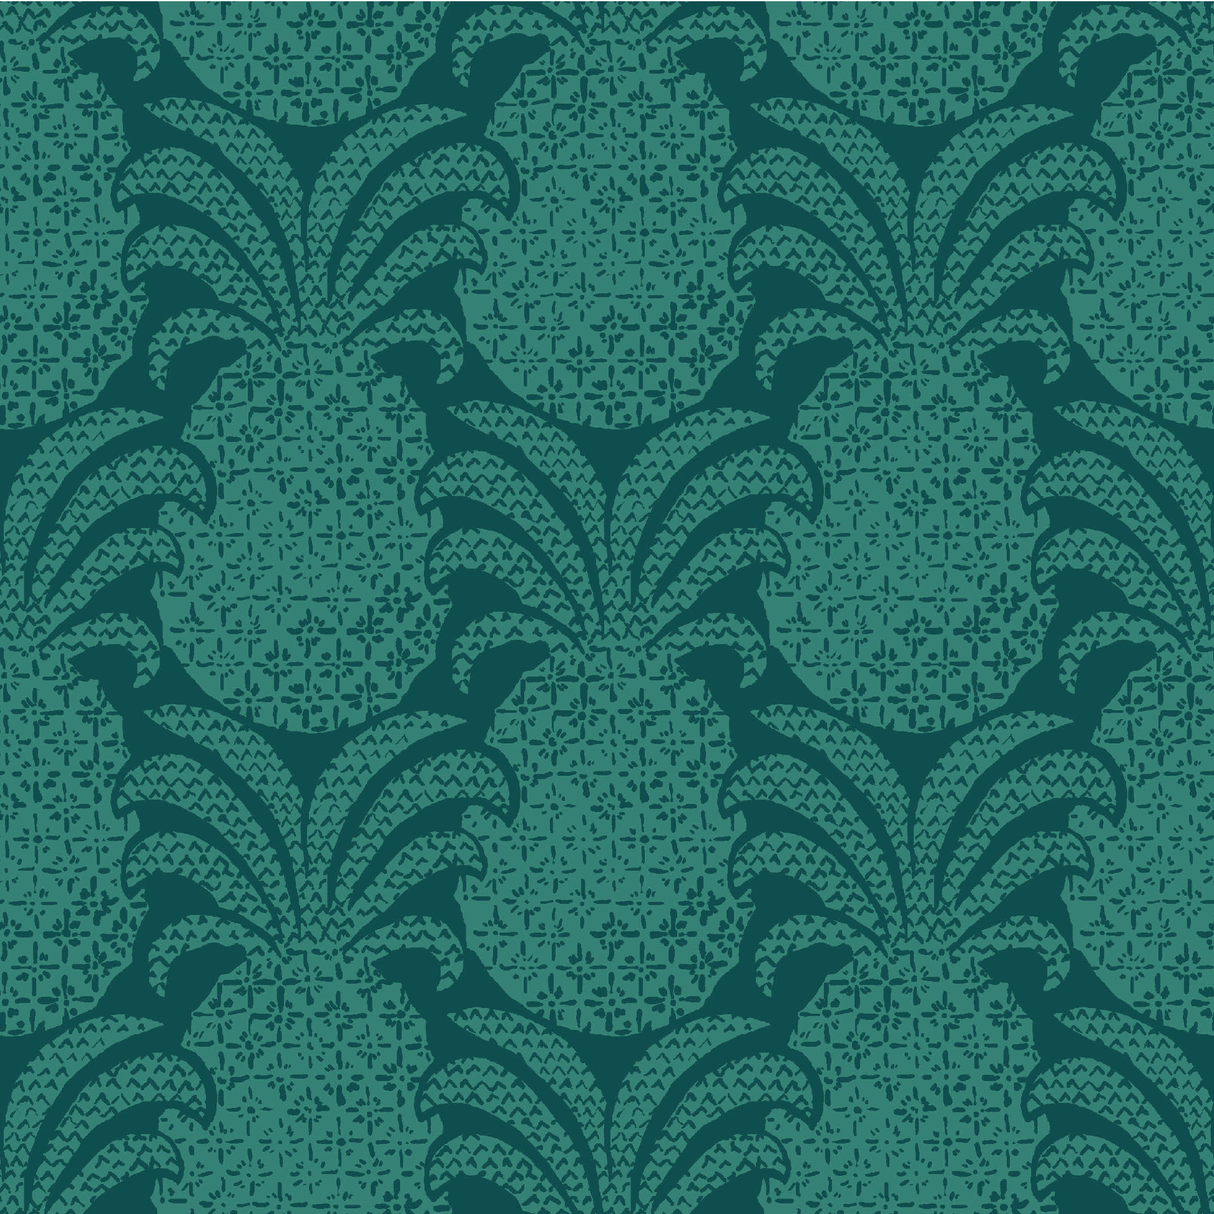 Round Hill Jungle Green Fabric Sample